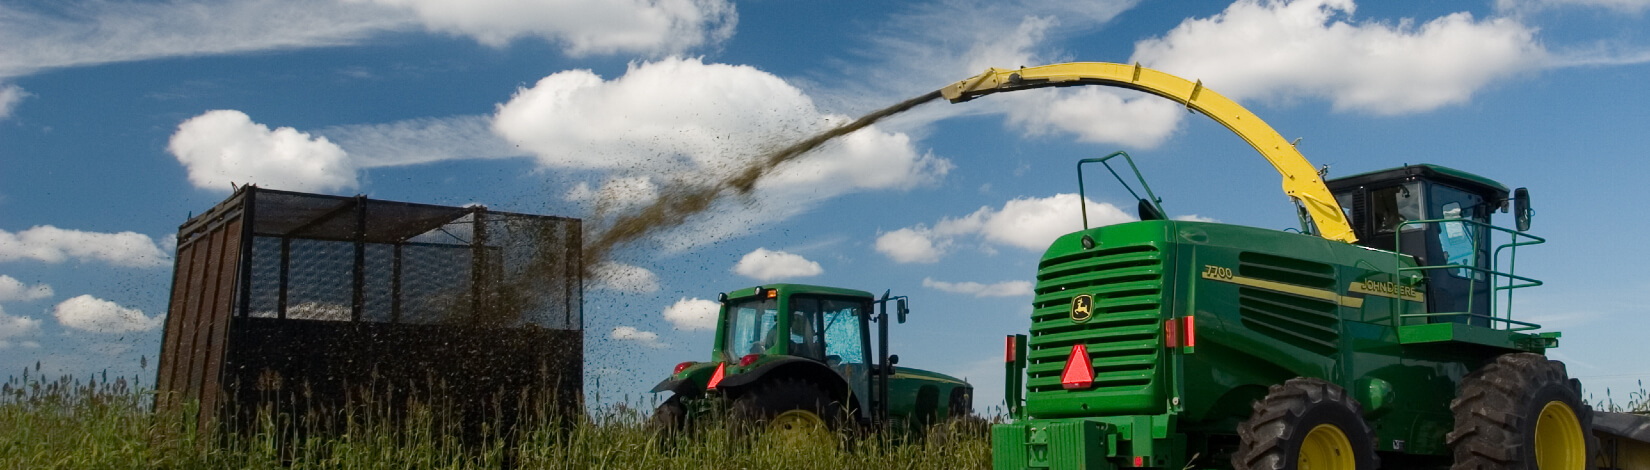 tractor plowing a field for bioenergy crop